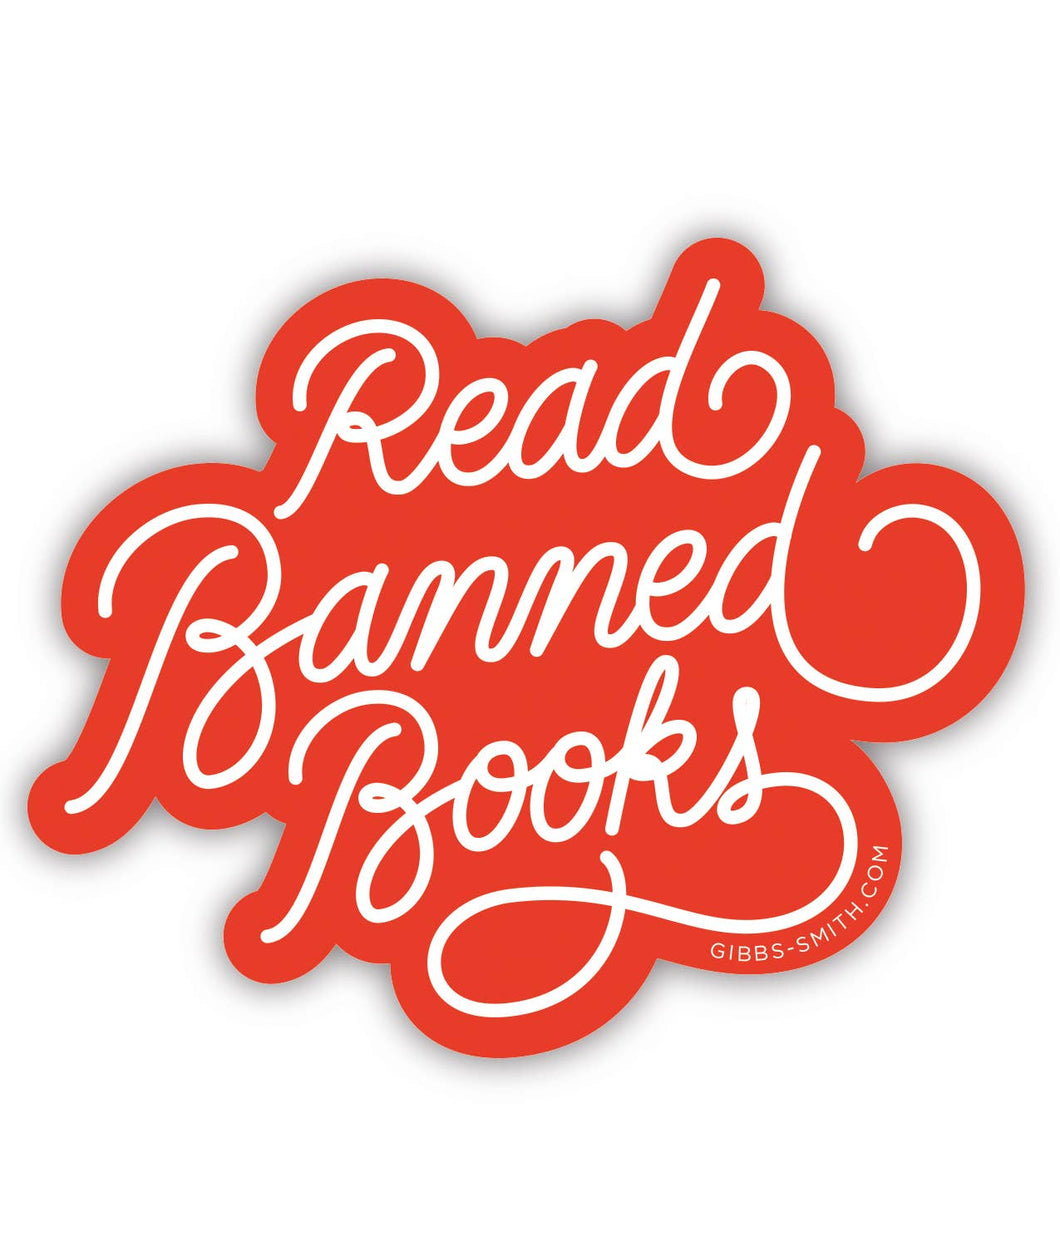 Read Banned Books (Sticker)